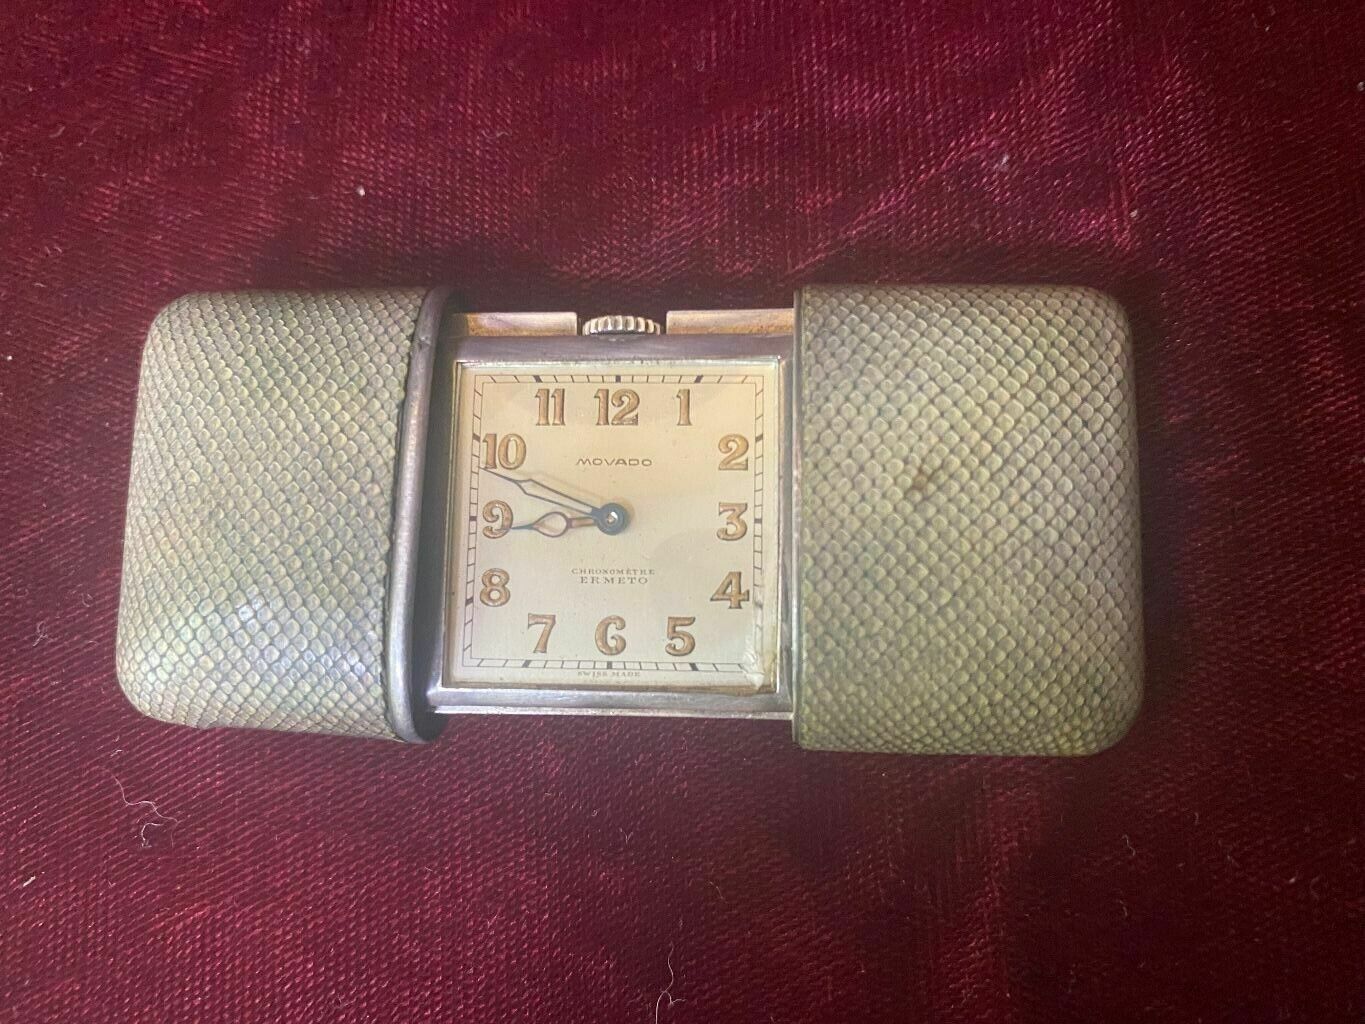 Vintage Movado Ermeto Chronometre Sterling Silver Traveling Watch (Circa 1930's)